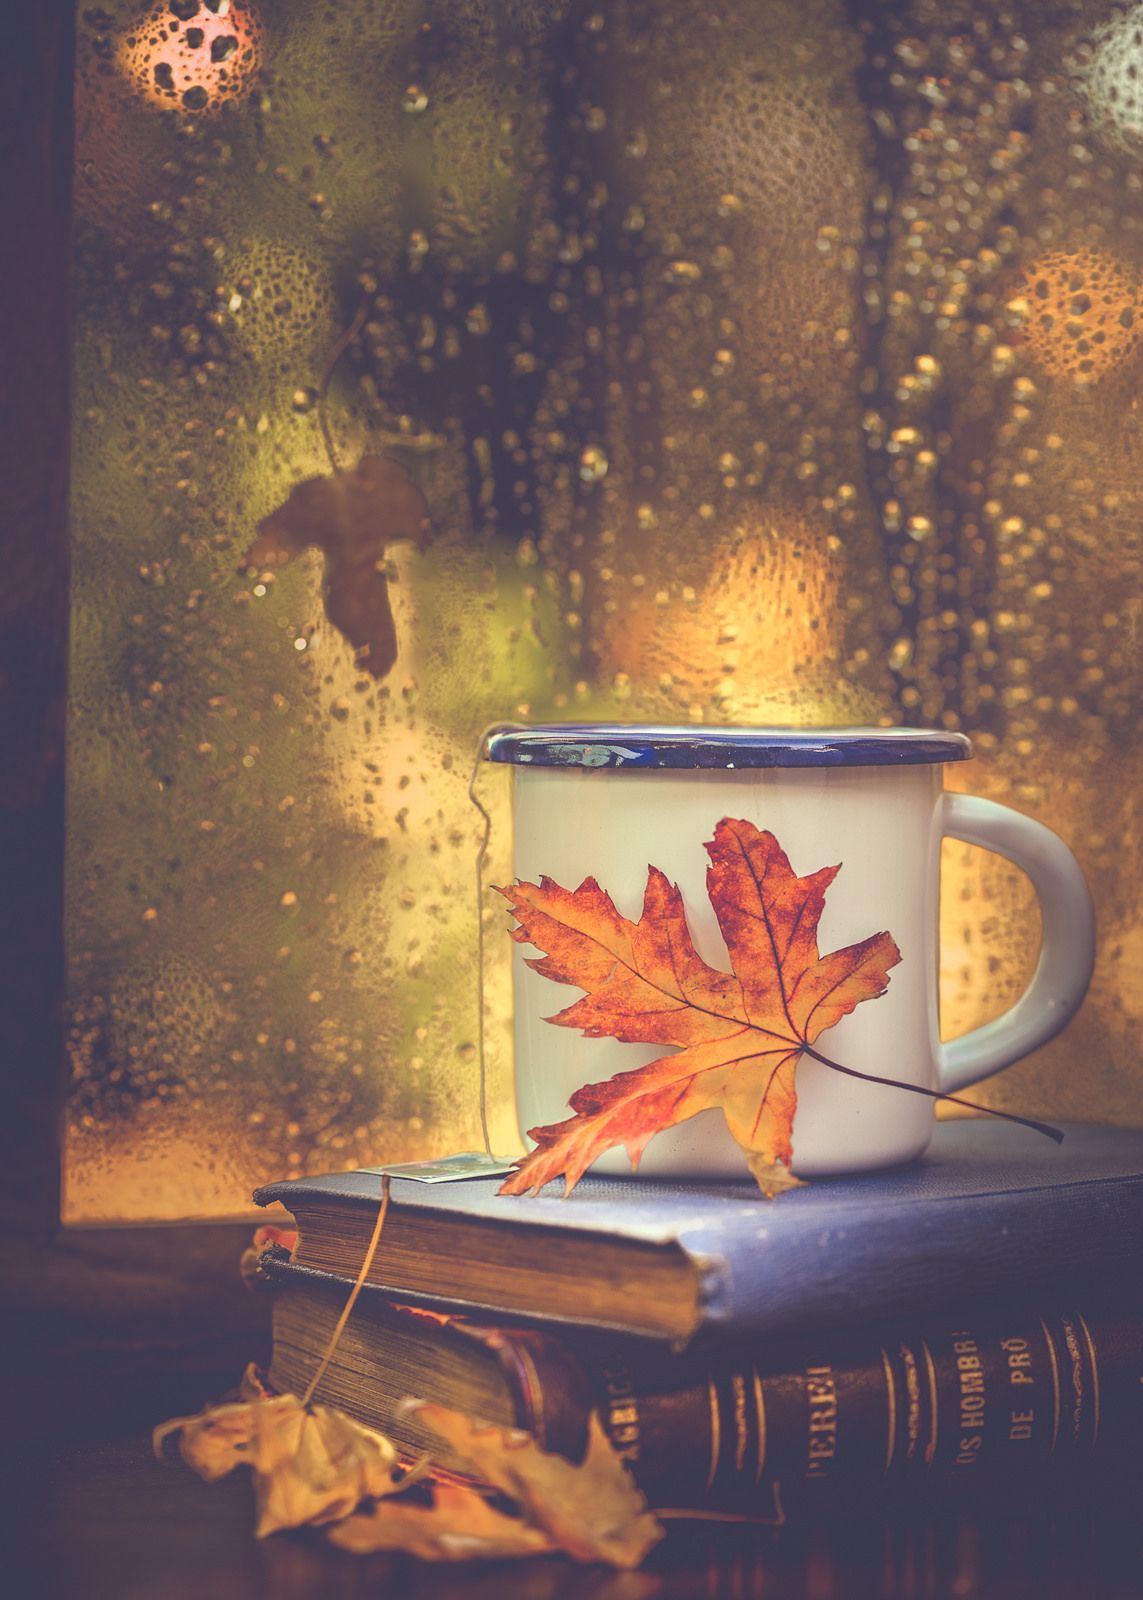 Books, tea and rain drops. Fall picture, Autumn inspiration, Autumn cozy